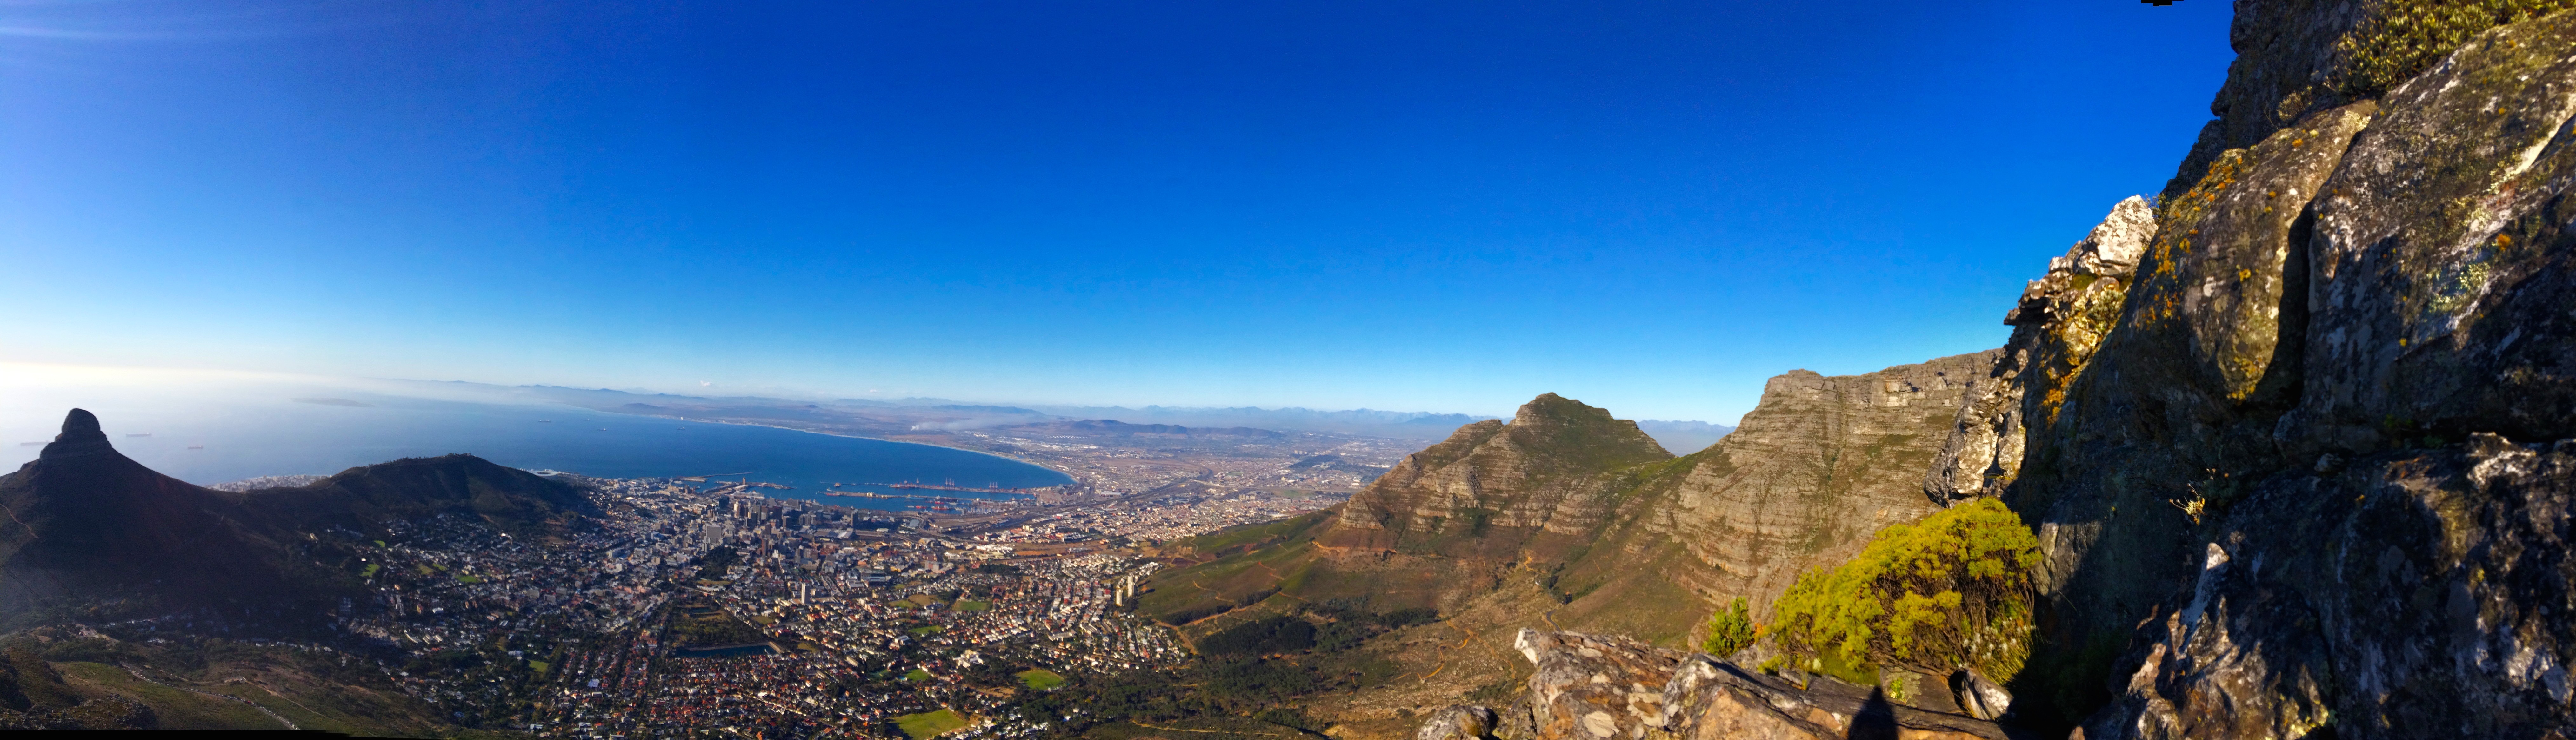 La vue de Table Mountain